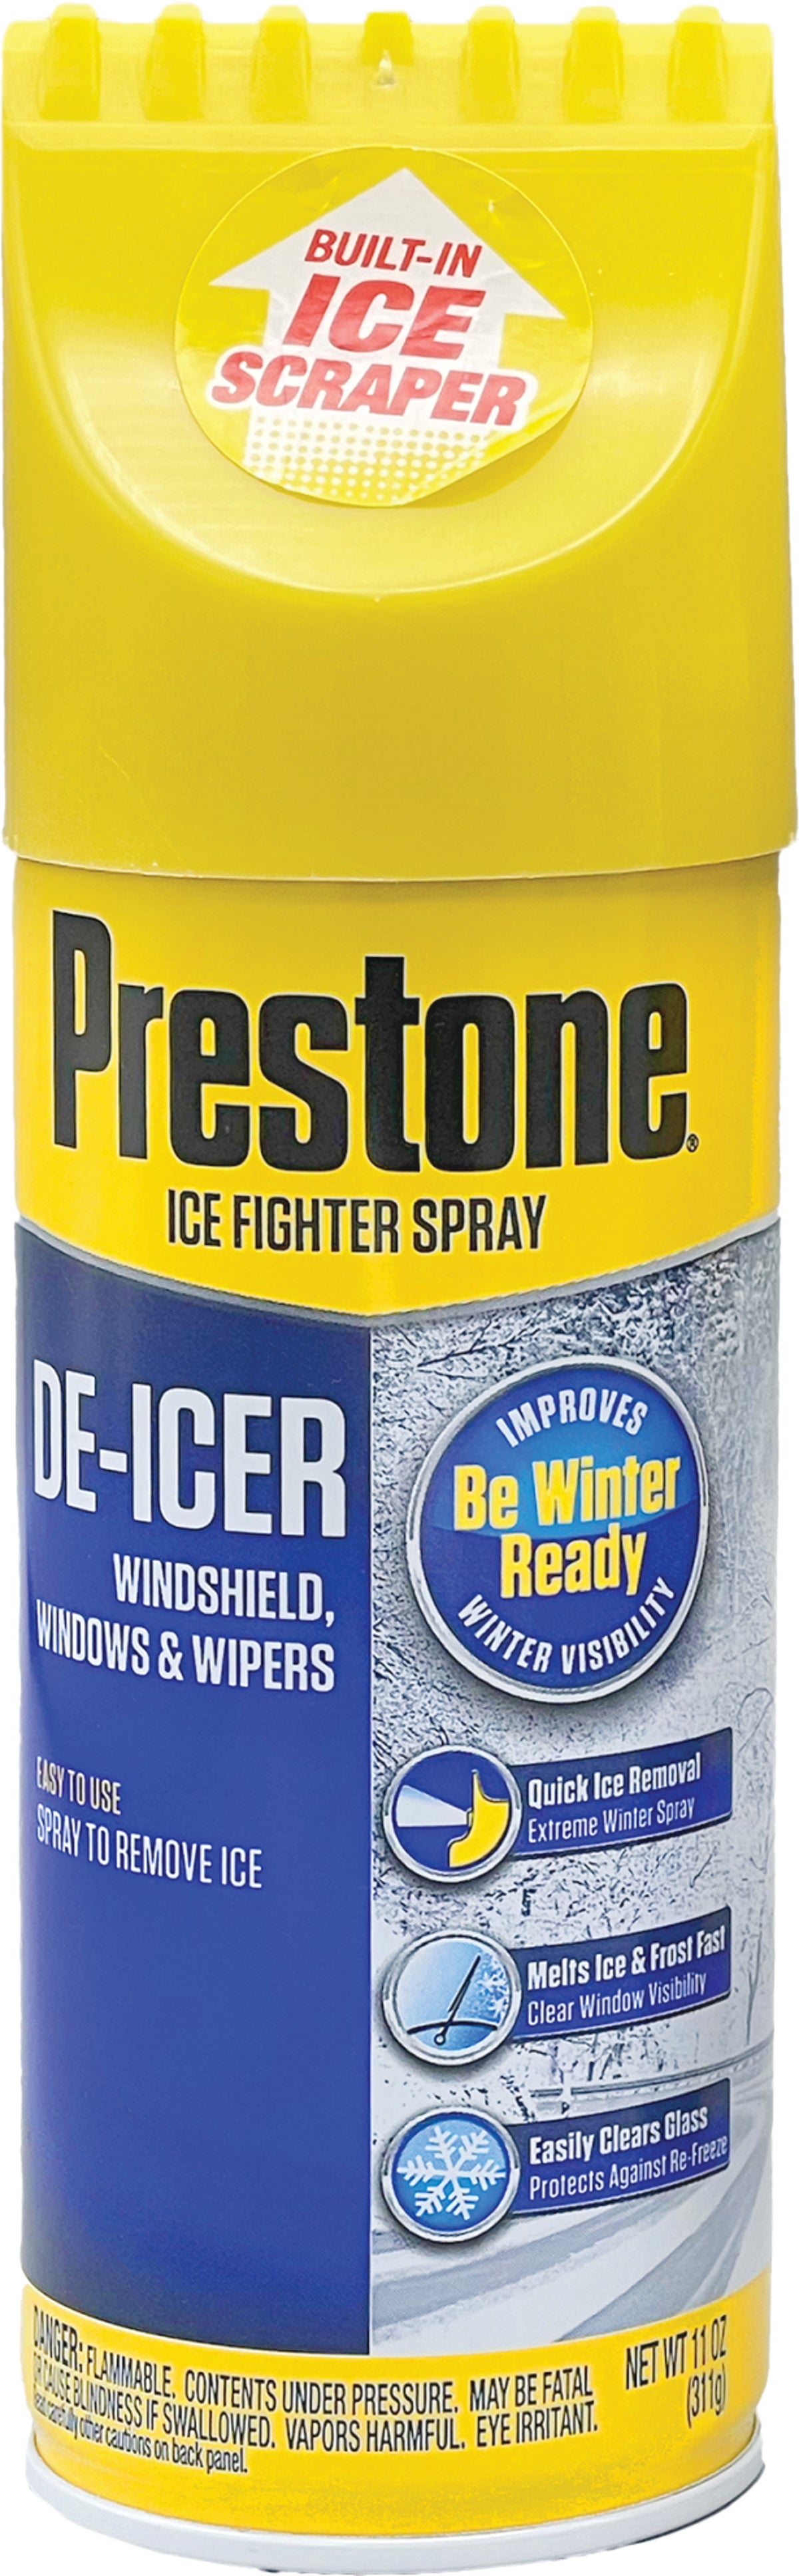 Prestone 11-Oz Aerosol De-Icer, Prevents Re-Freezing